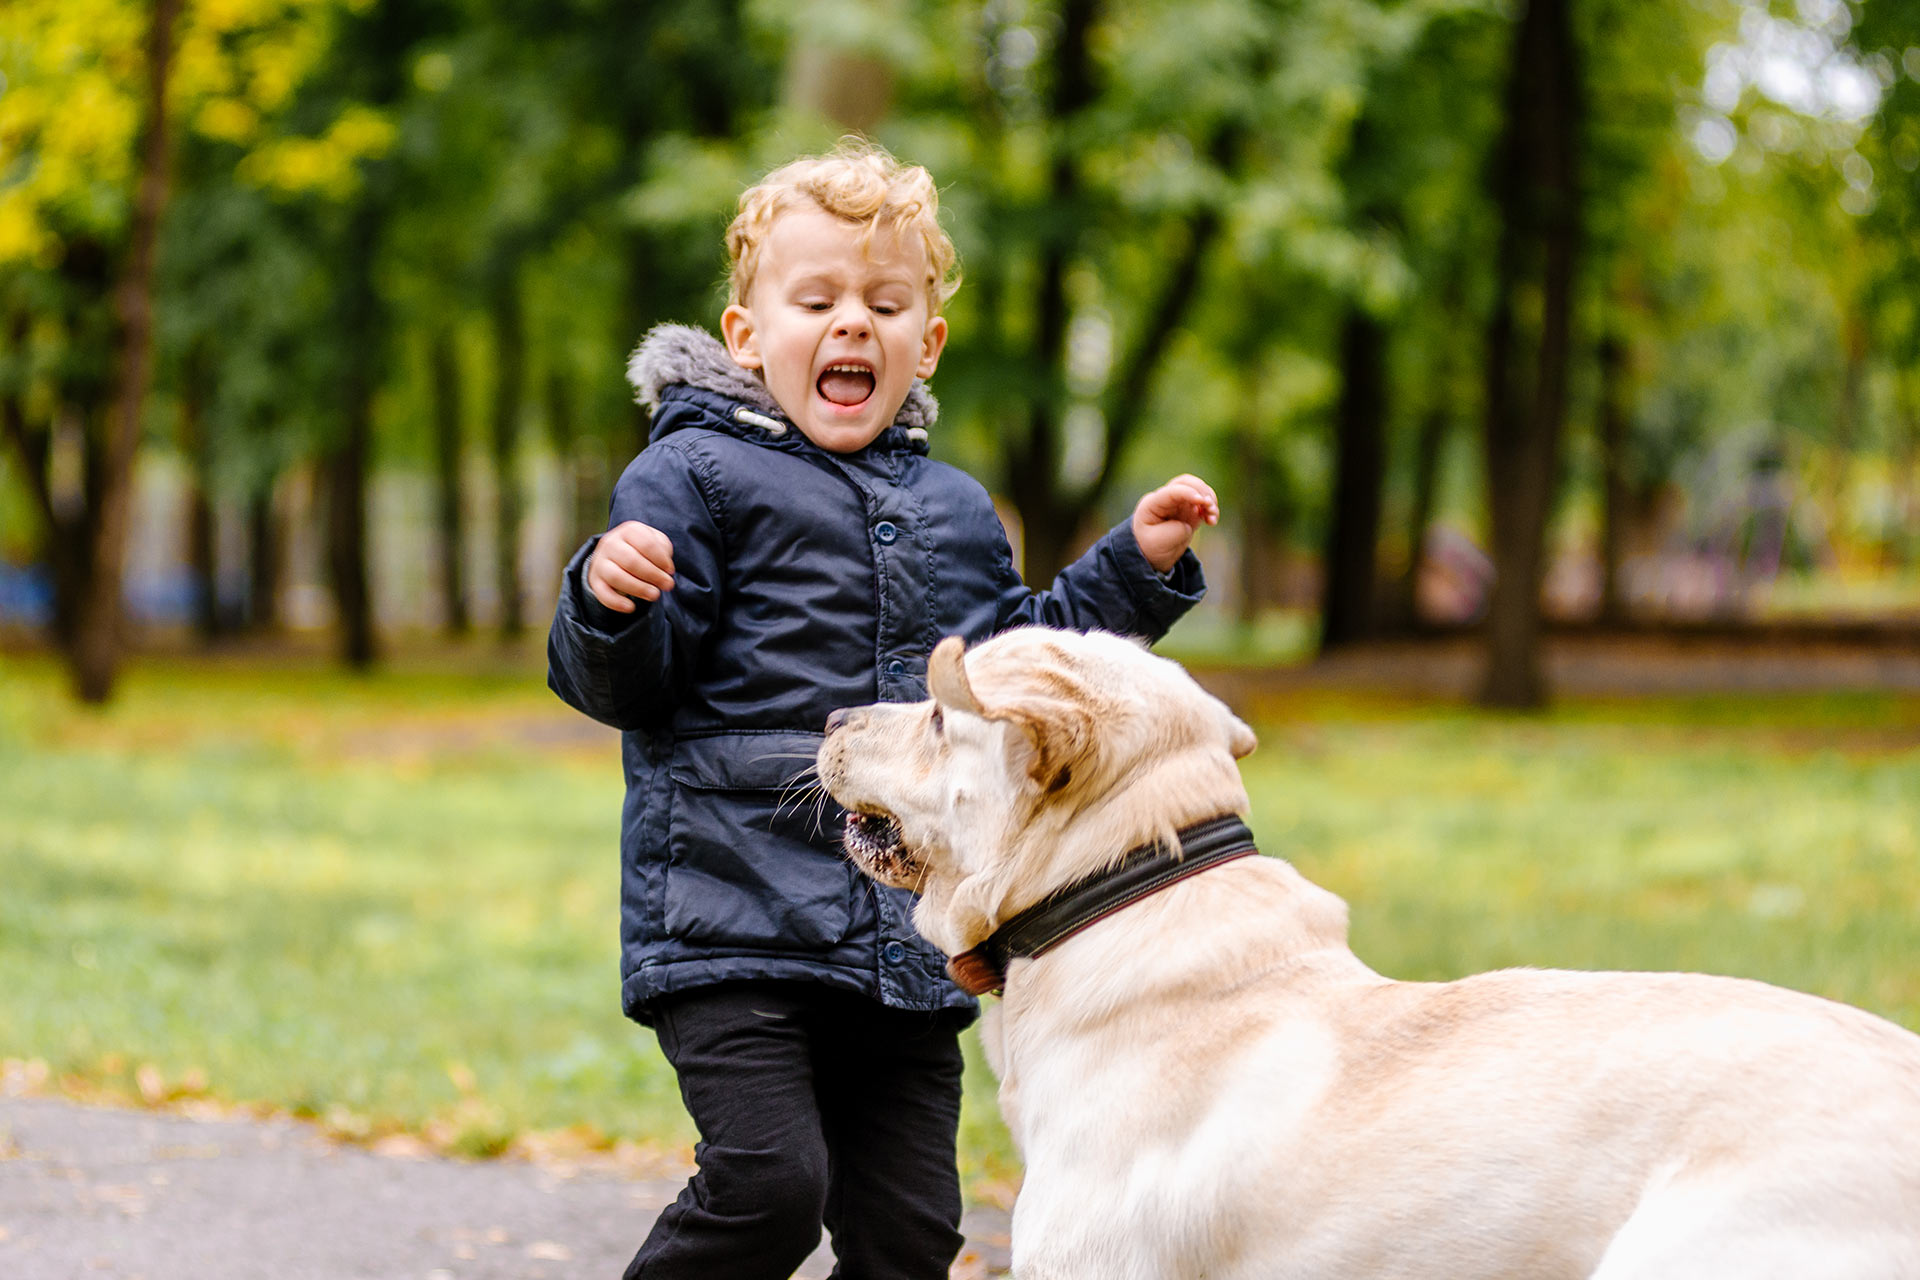 Dog bite attorney concept: big dog bites a child in the park